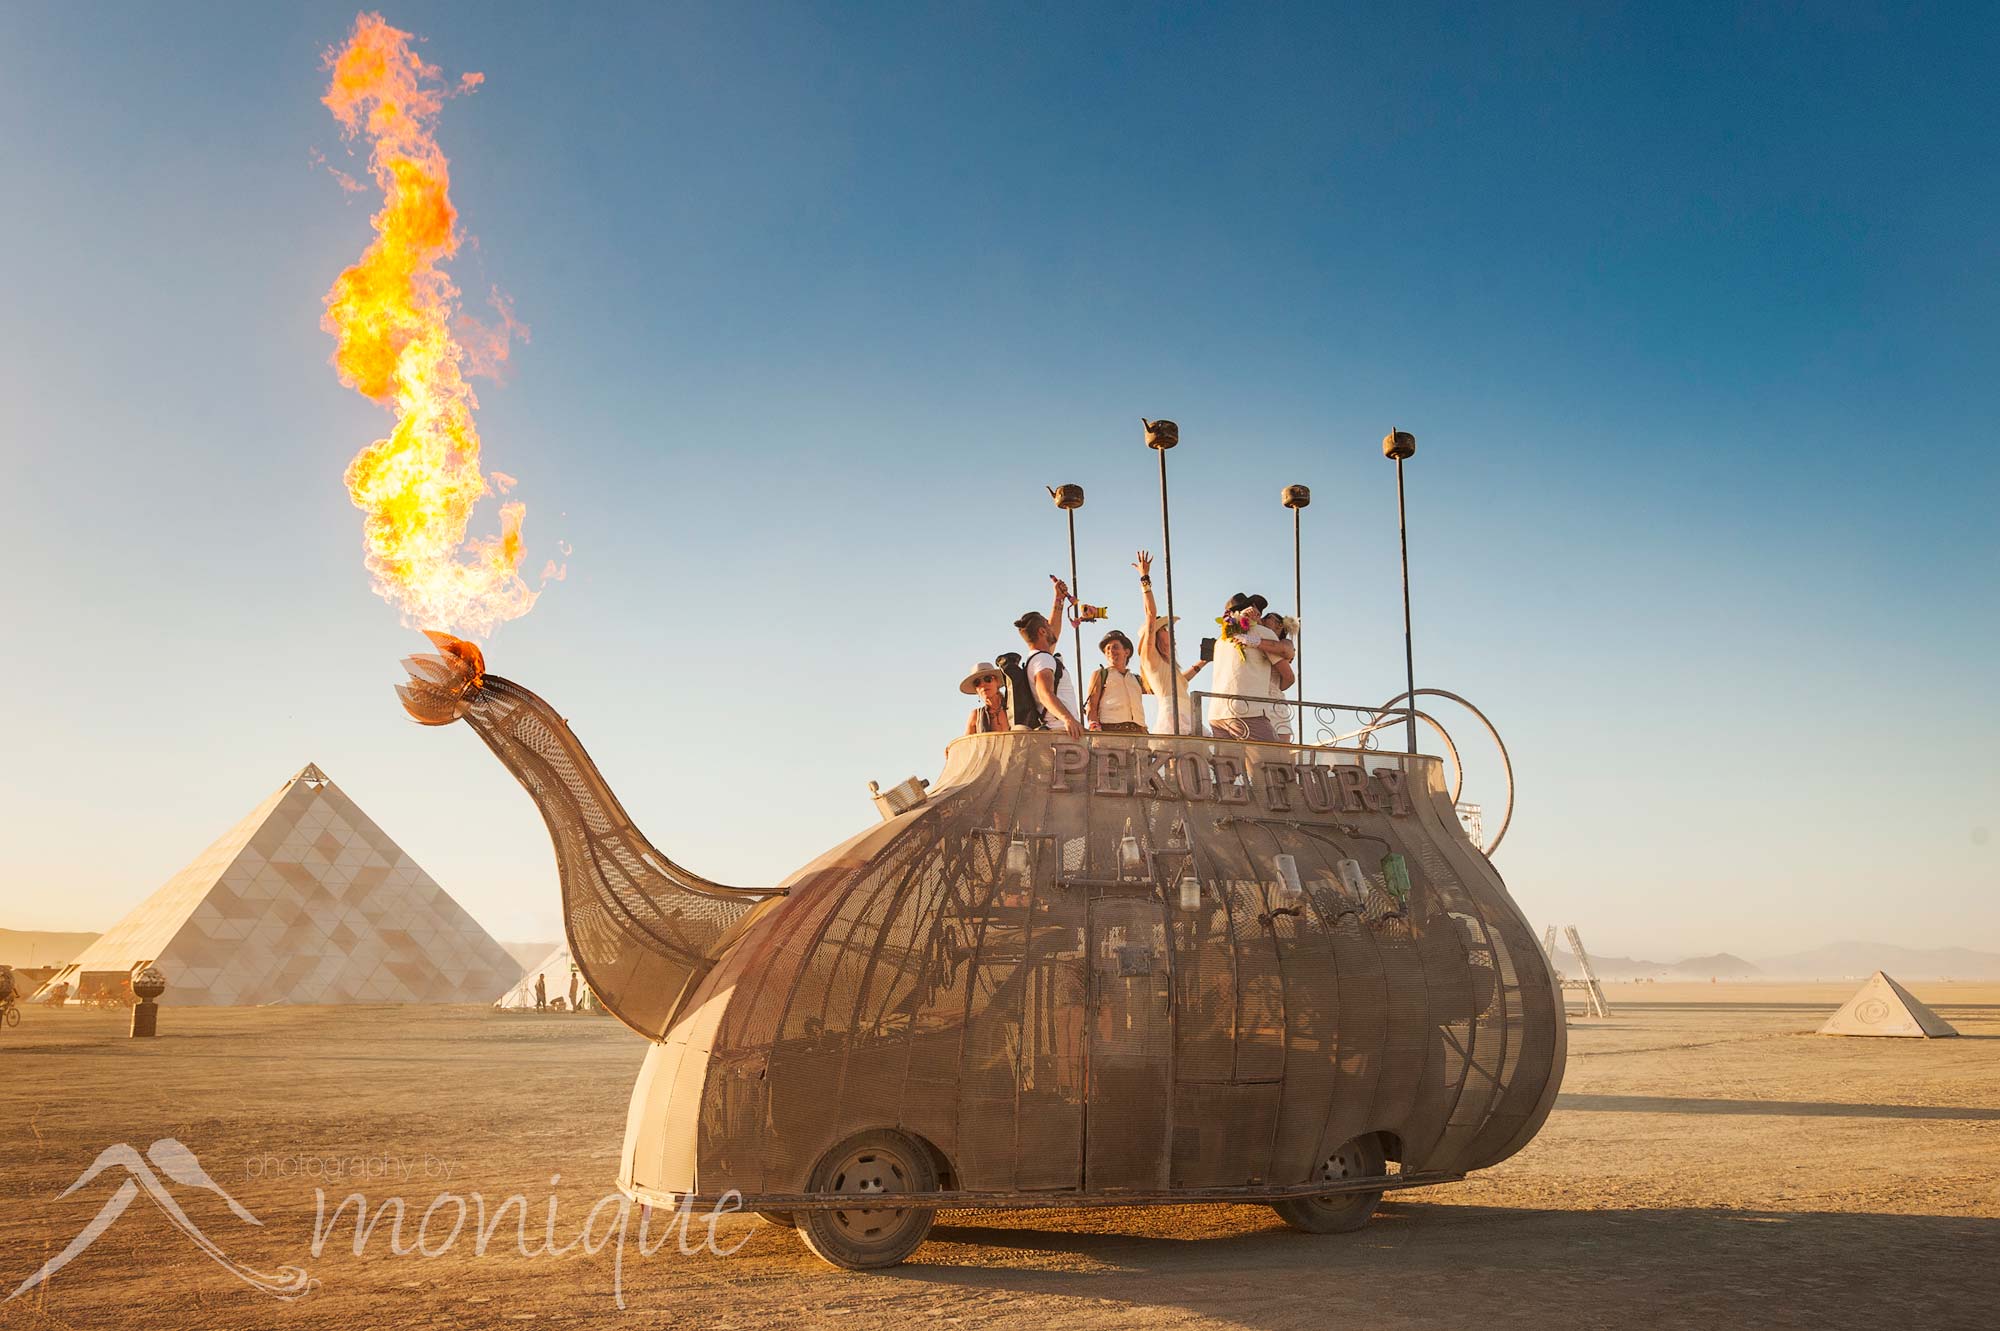 Burning Man wedding photography for Sita Devi and Sunshine, Pekoe Fury tea pot art car, Janet Stone, PlayAlchelist Grand Pyramid